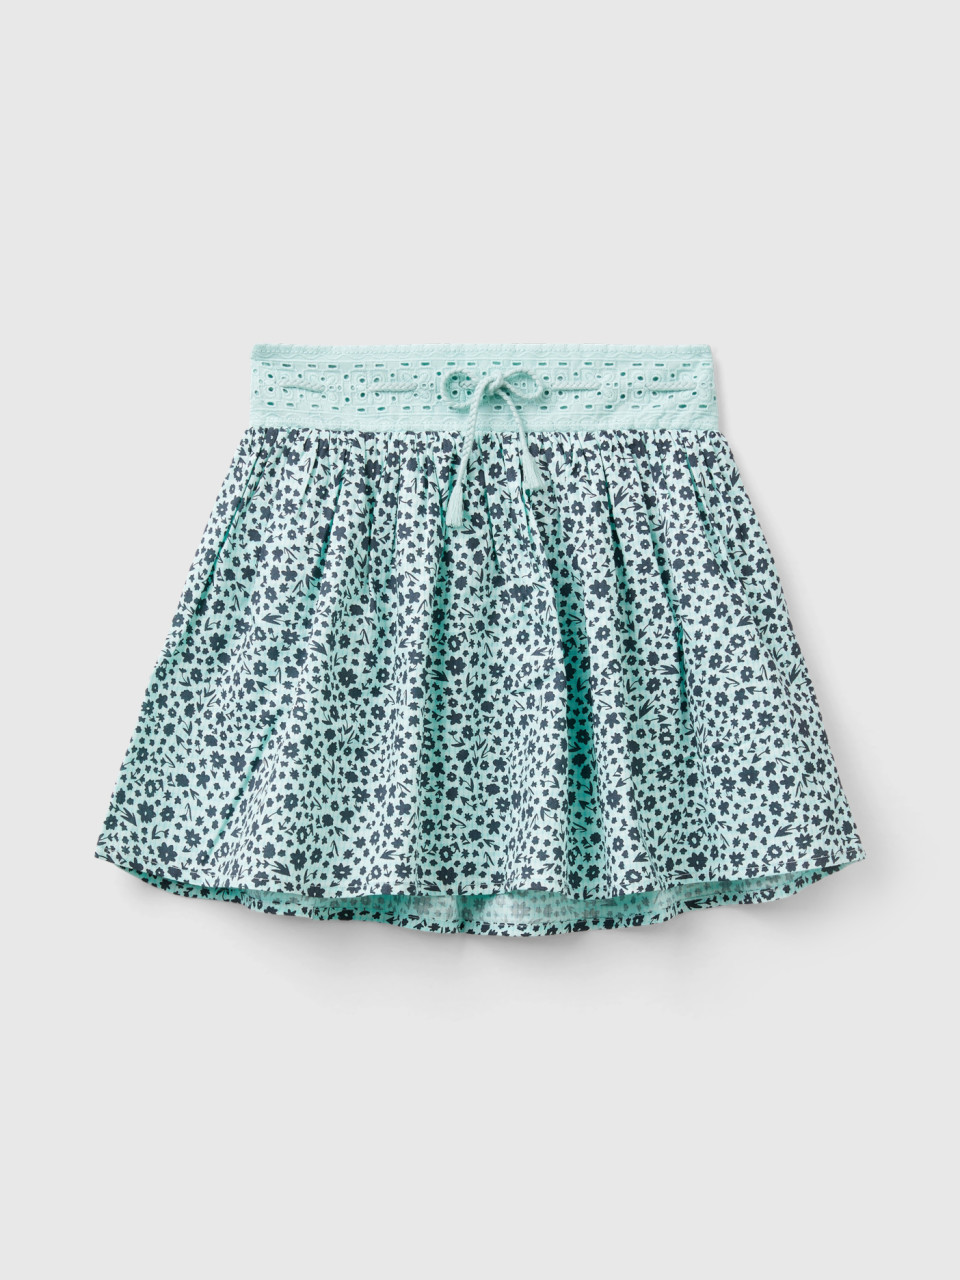 Benetton, Skirt With Floral Print, Aqua, Kids